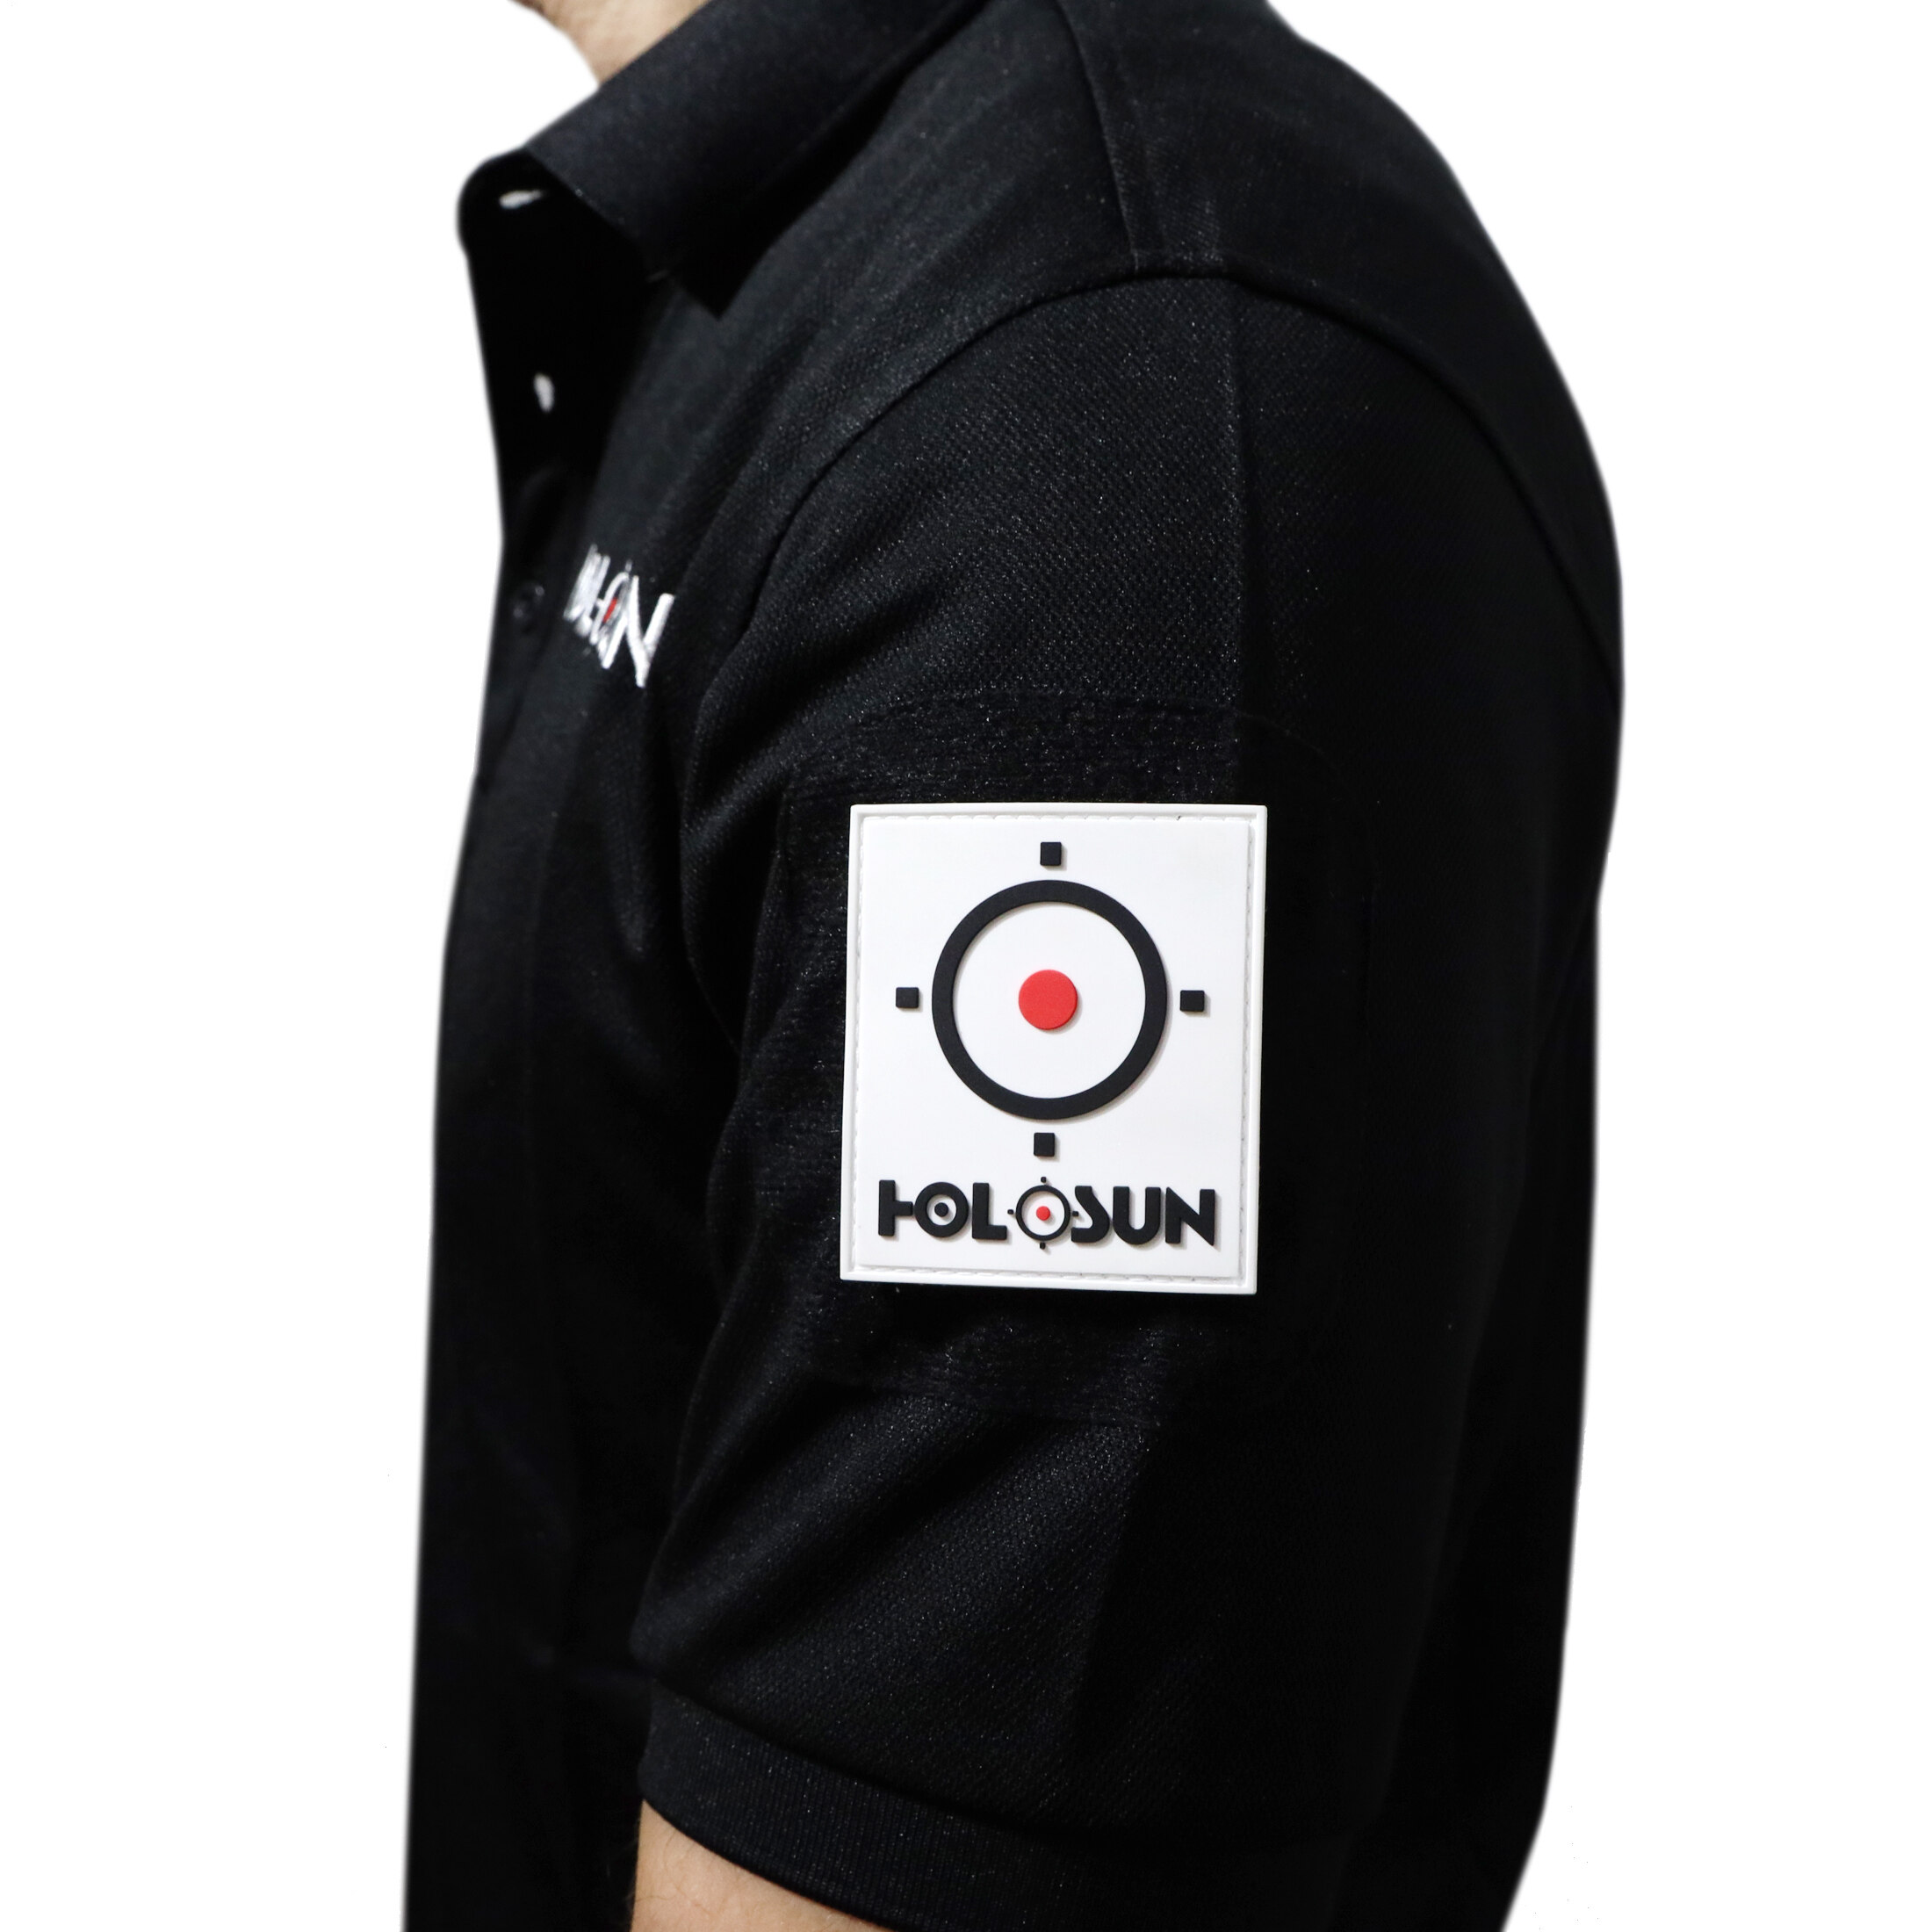 Холосун Merchandise HOLOSUN-KLETT-PATCH-SQUARE-WHITE